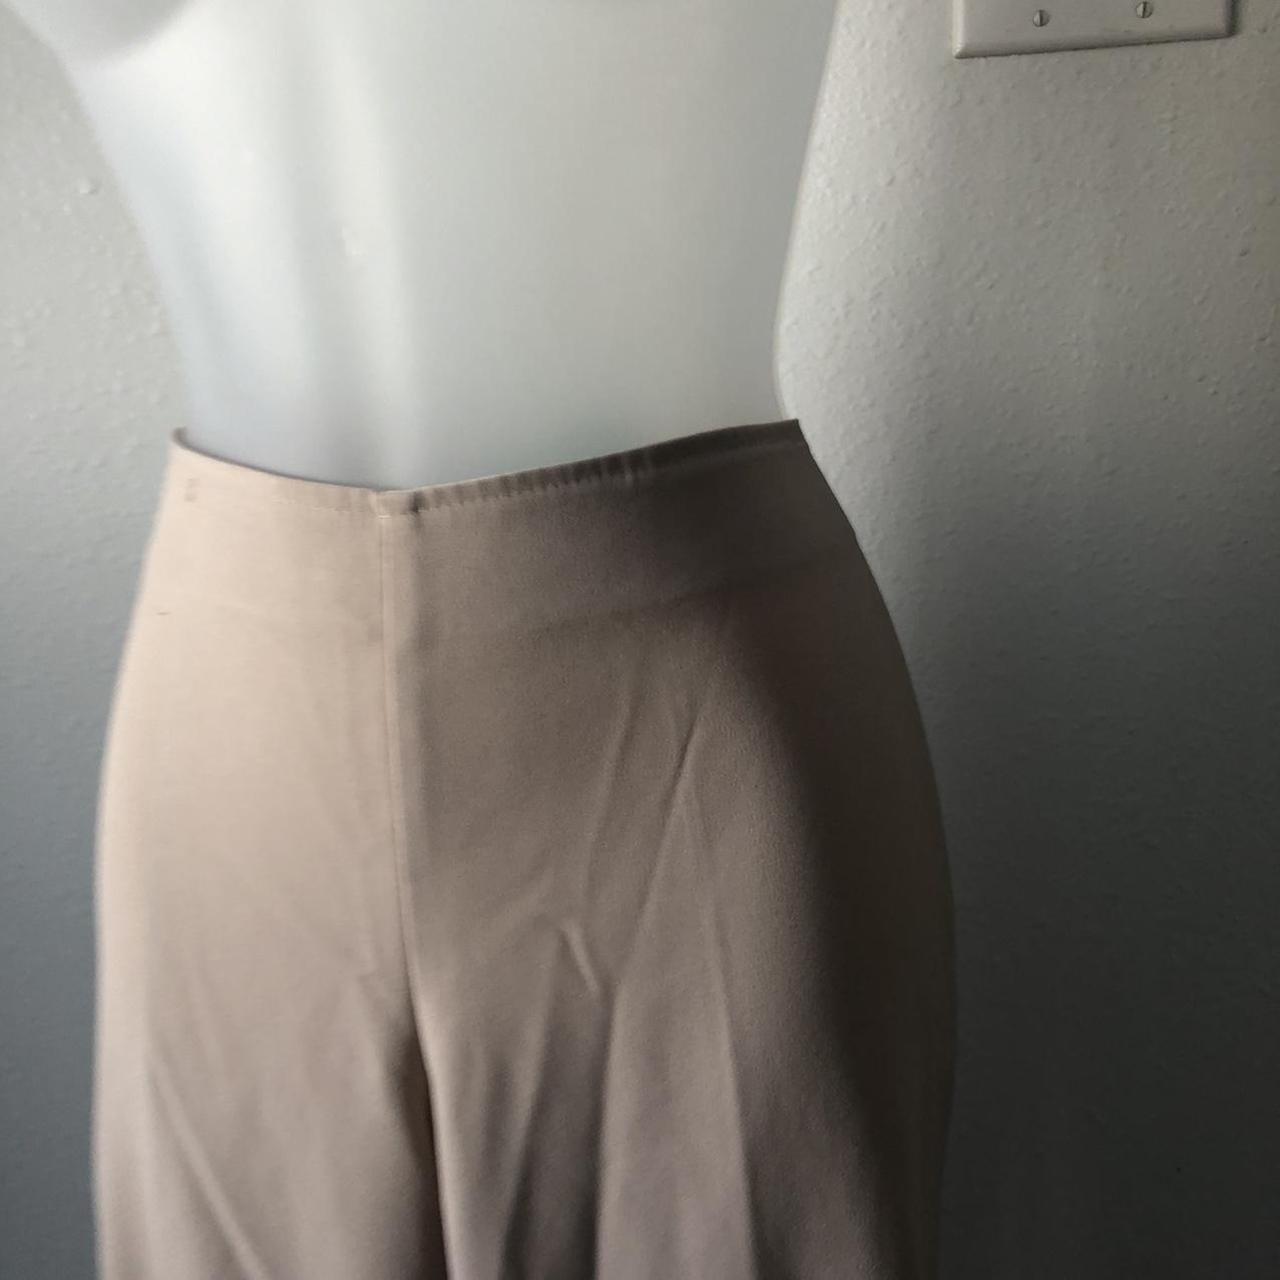 Product Image 2 - Khaki Flared Dress Pant

This high